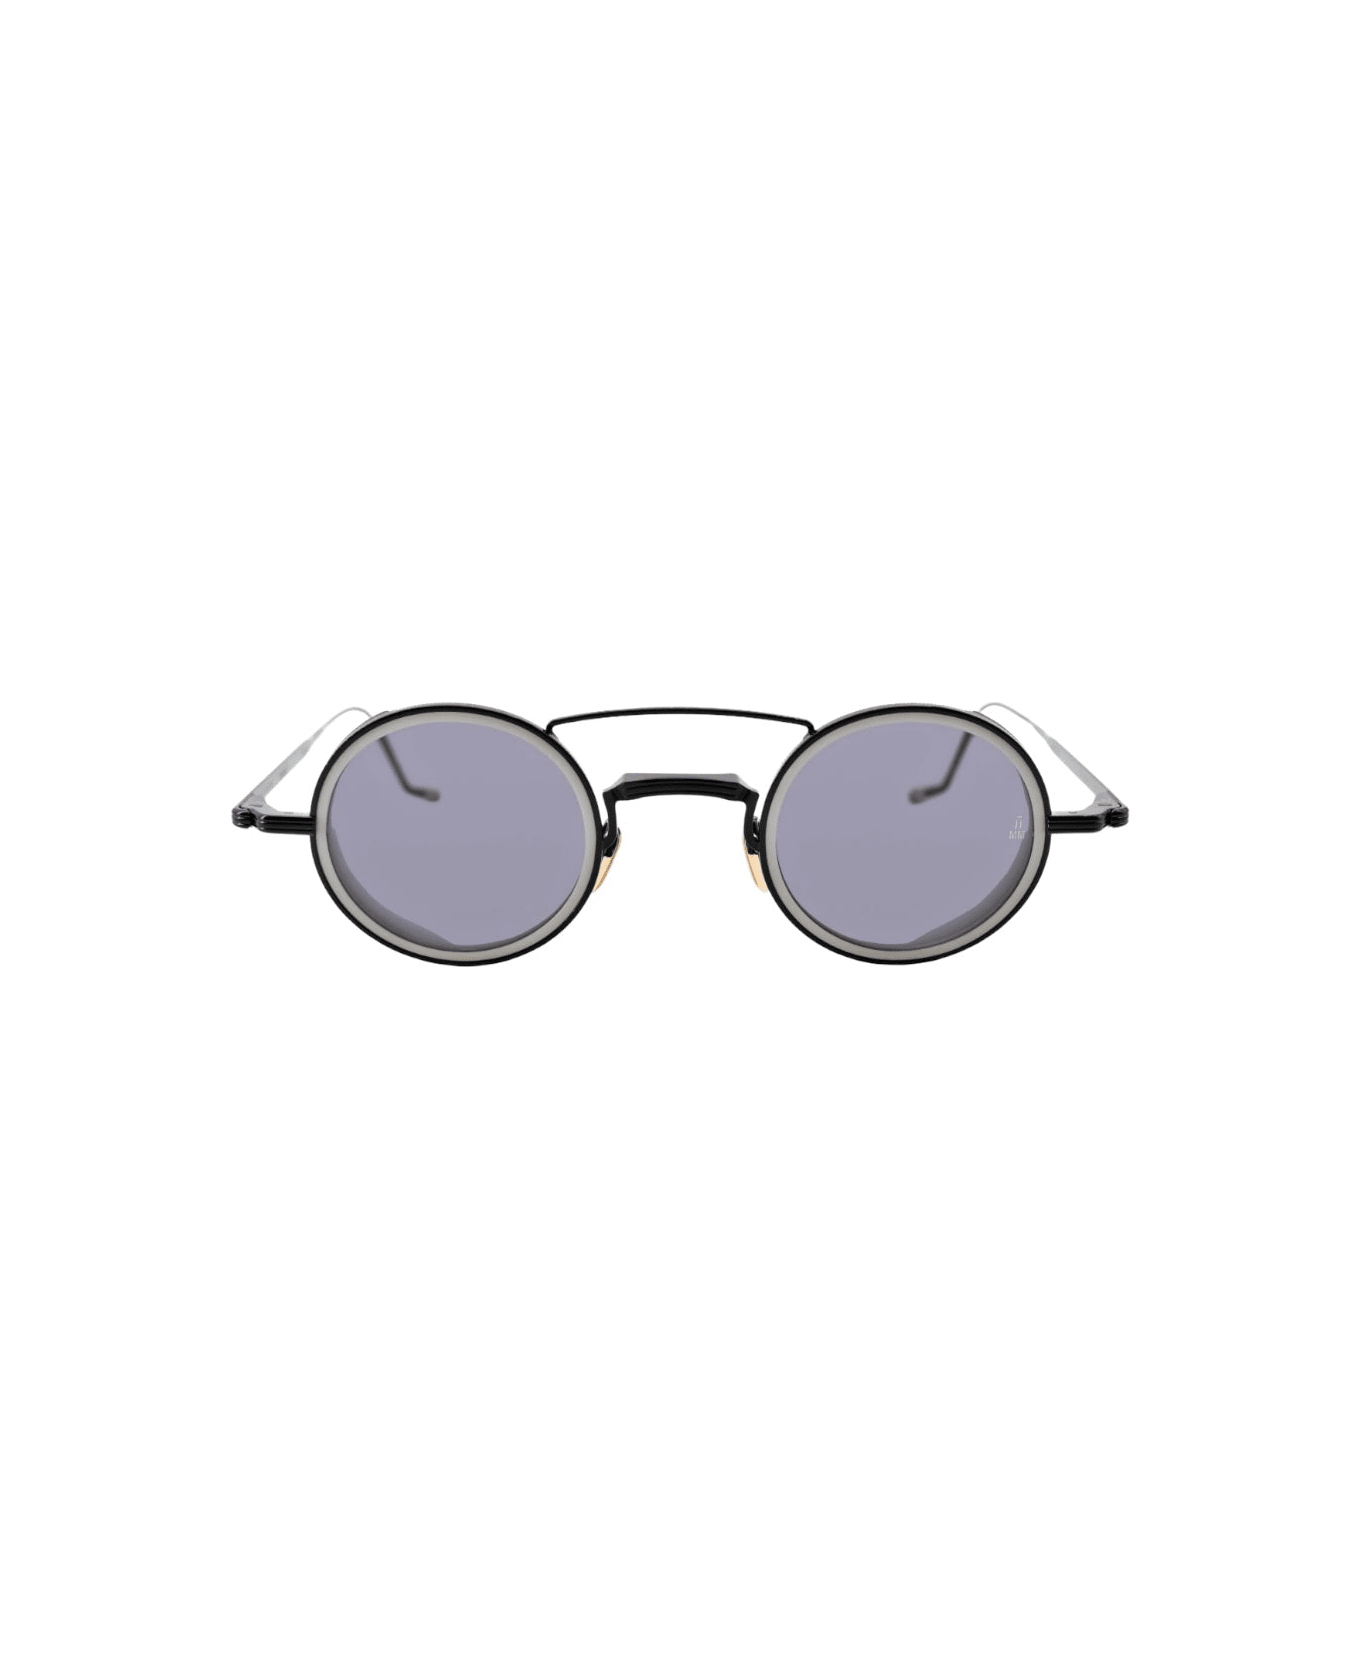 Jacques Marie Mage Ringo Sunglasses サングラス